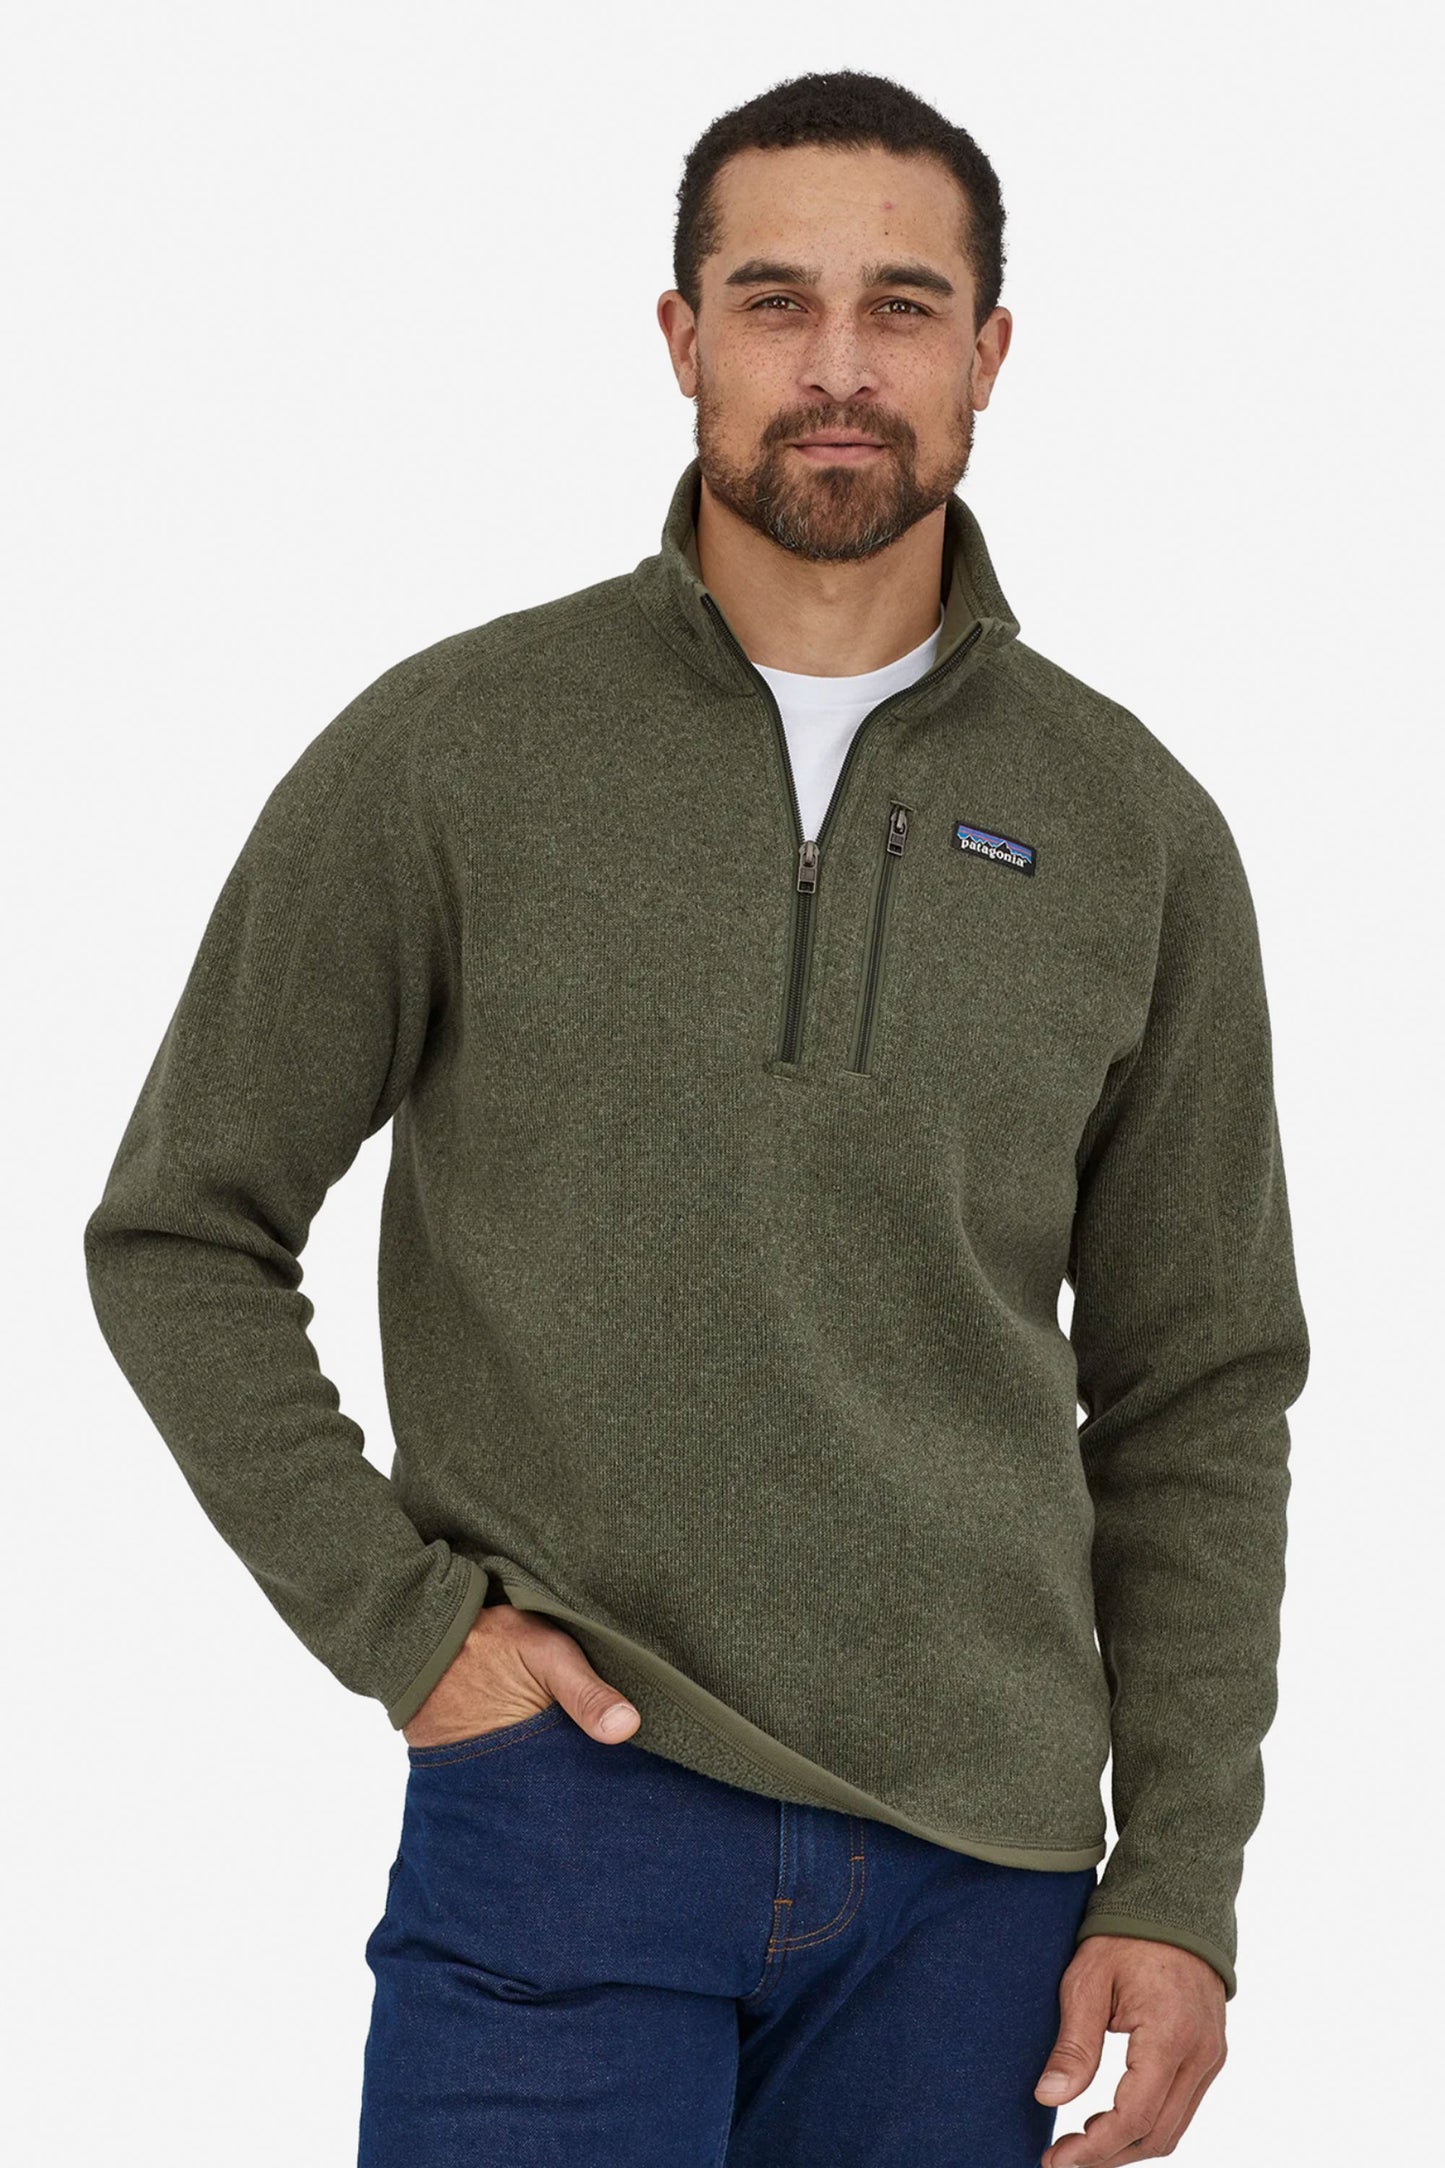 
                  
                       Pukas-Surf-Shop-patagonia-jacket-Better-Sweater
                  
                